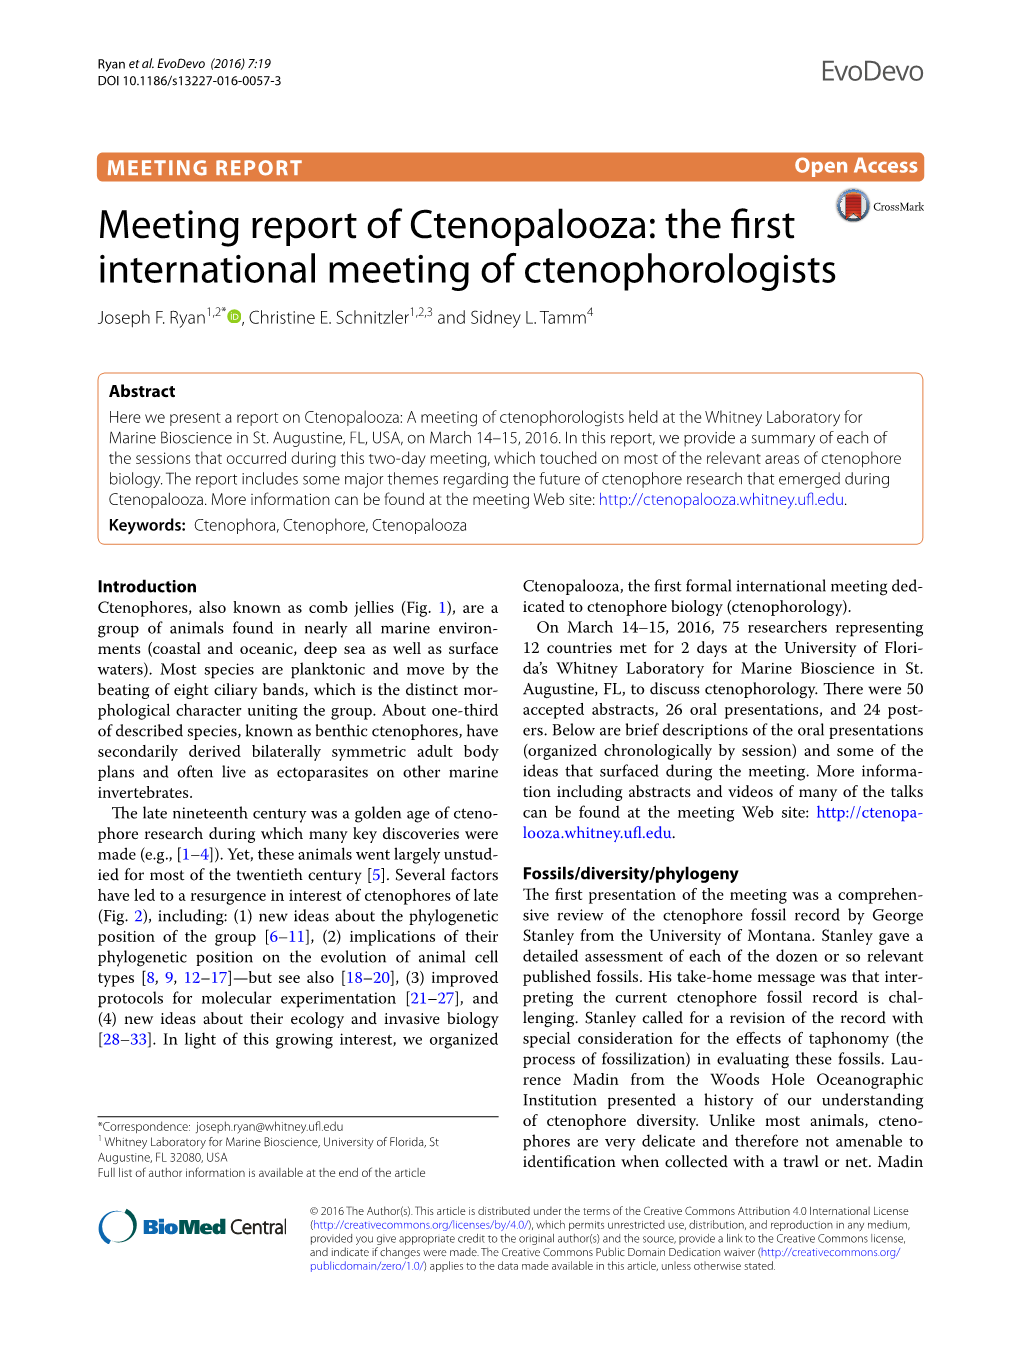 The First International Meeting of Ctenophorologists Joseph F